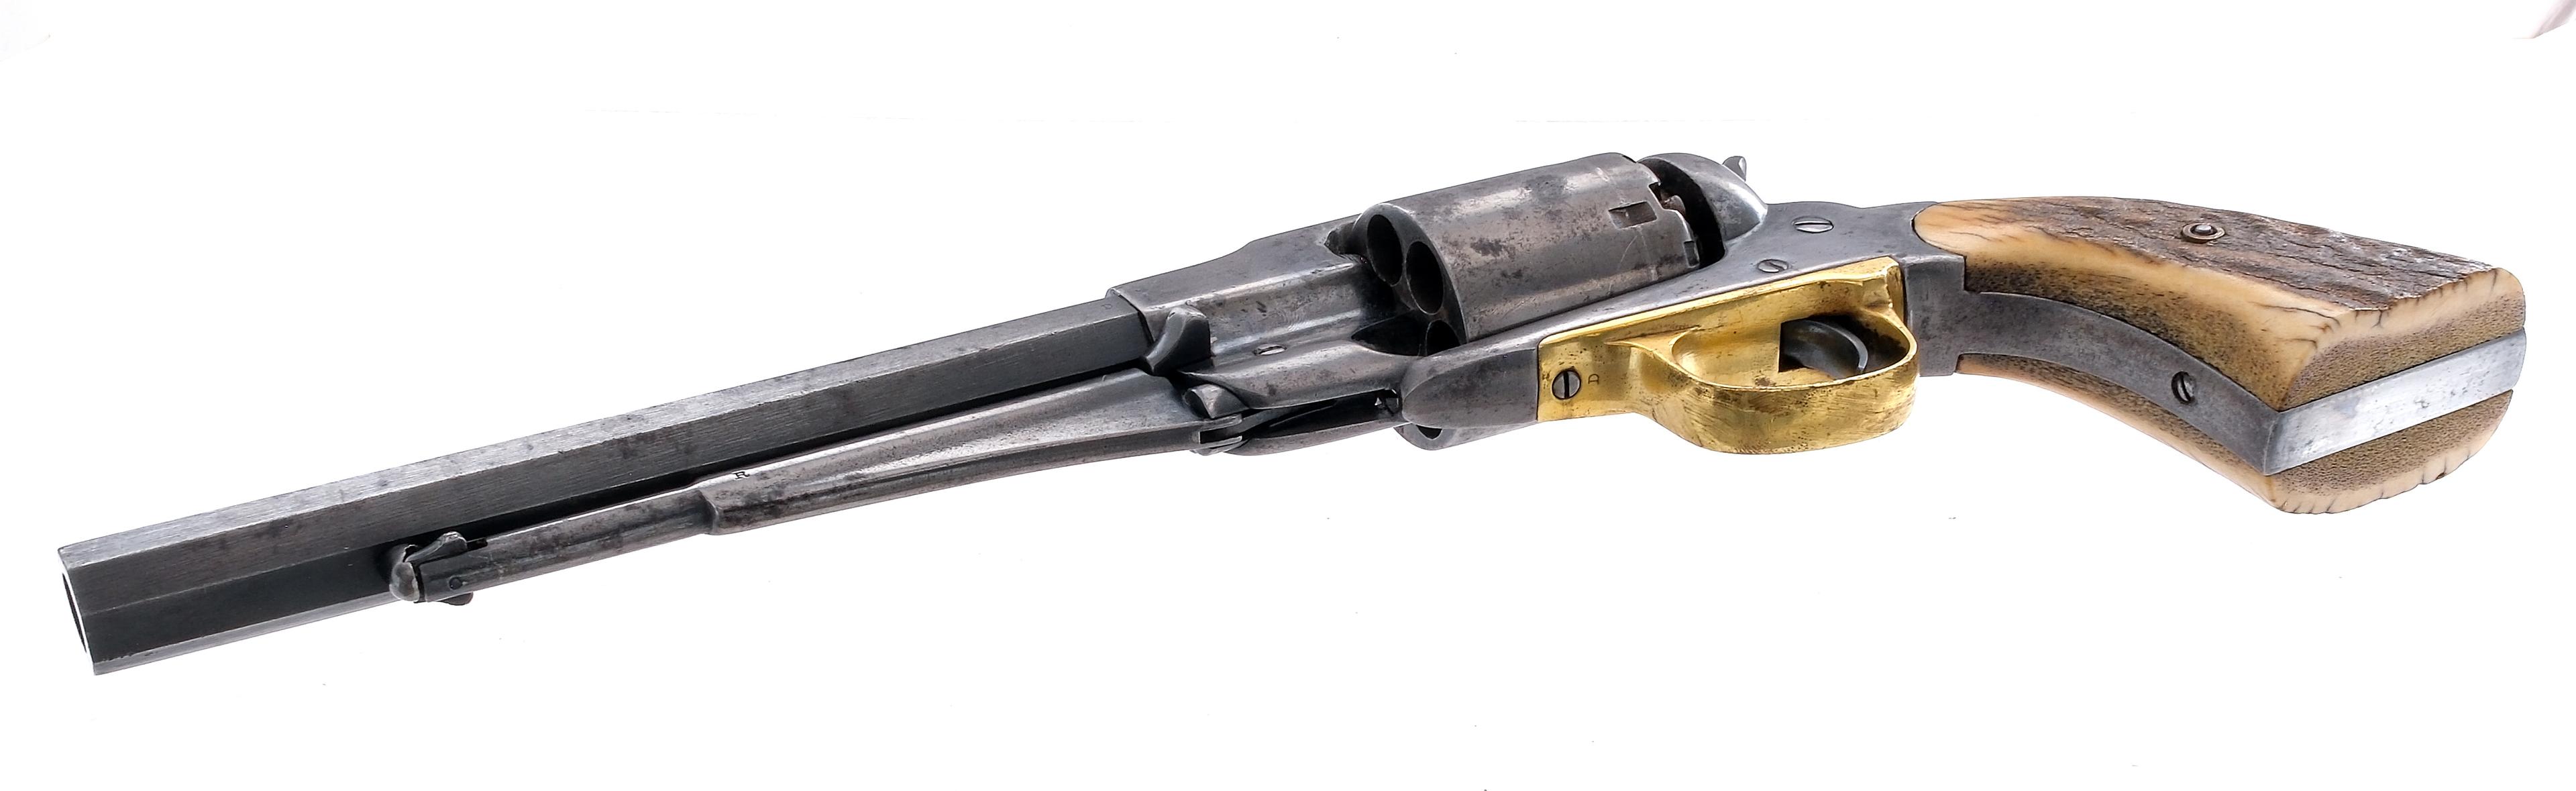 Remington New Model 1858 .44 SA Revolver